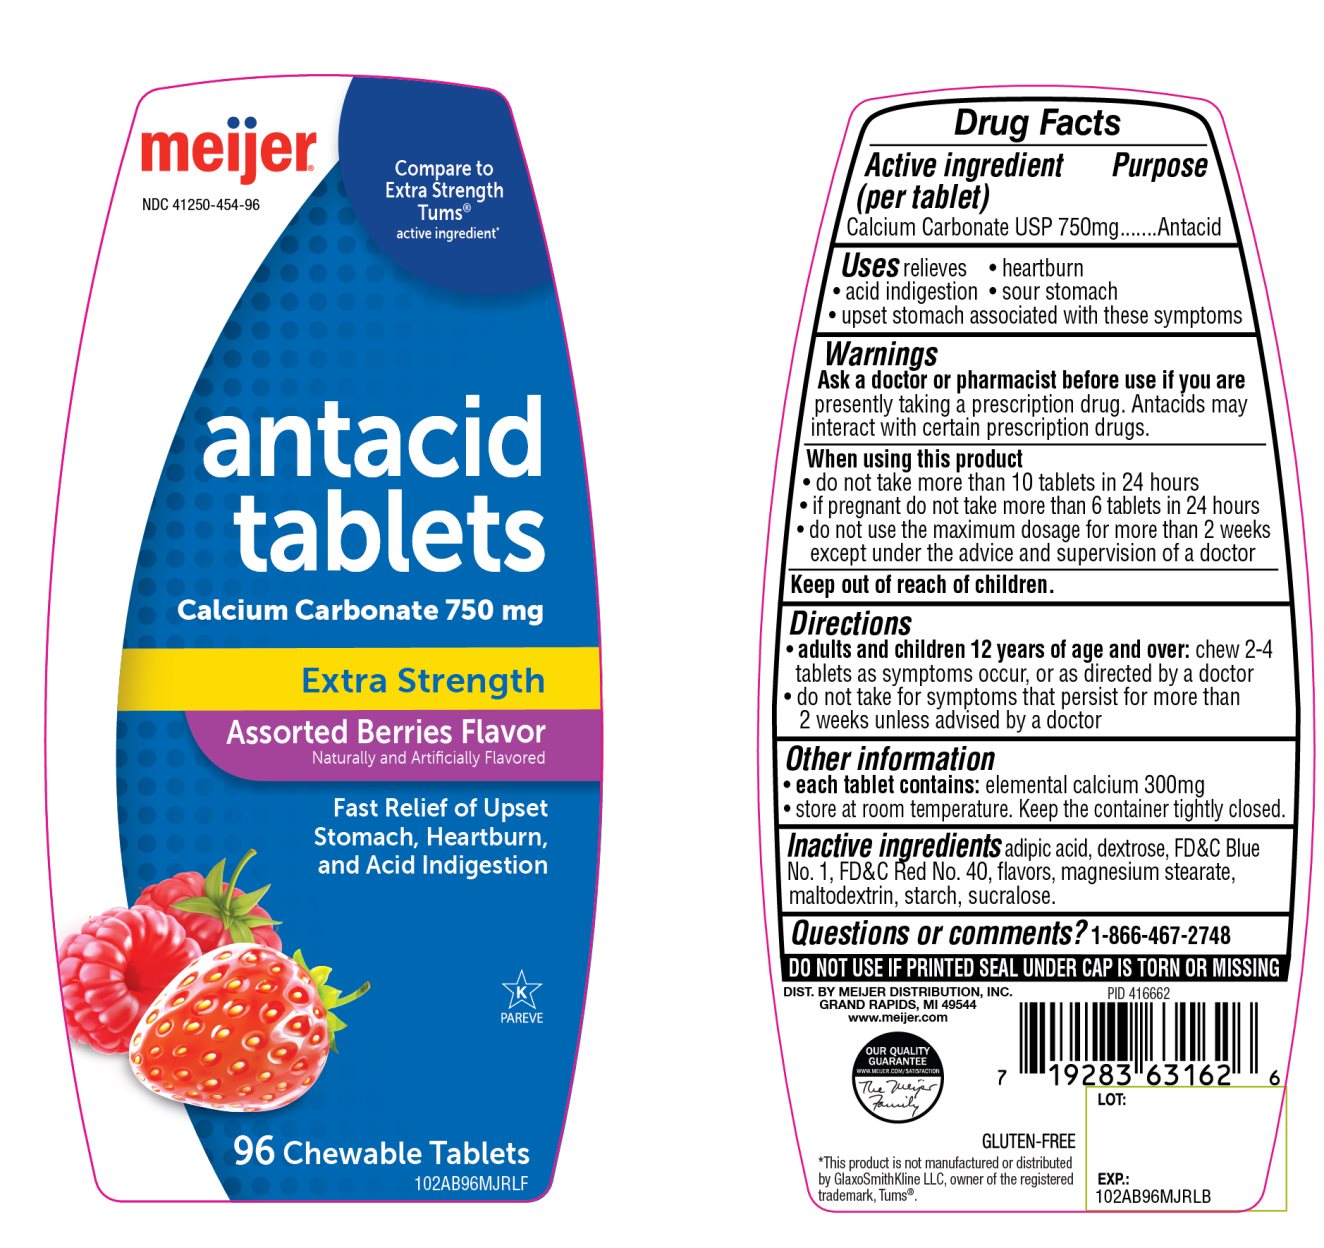 meijer antacid tablets calcium carbonate extra strength